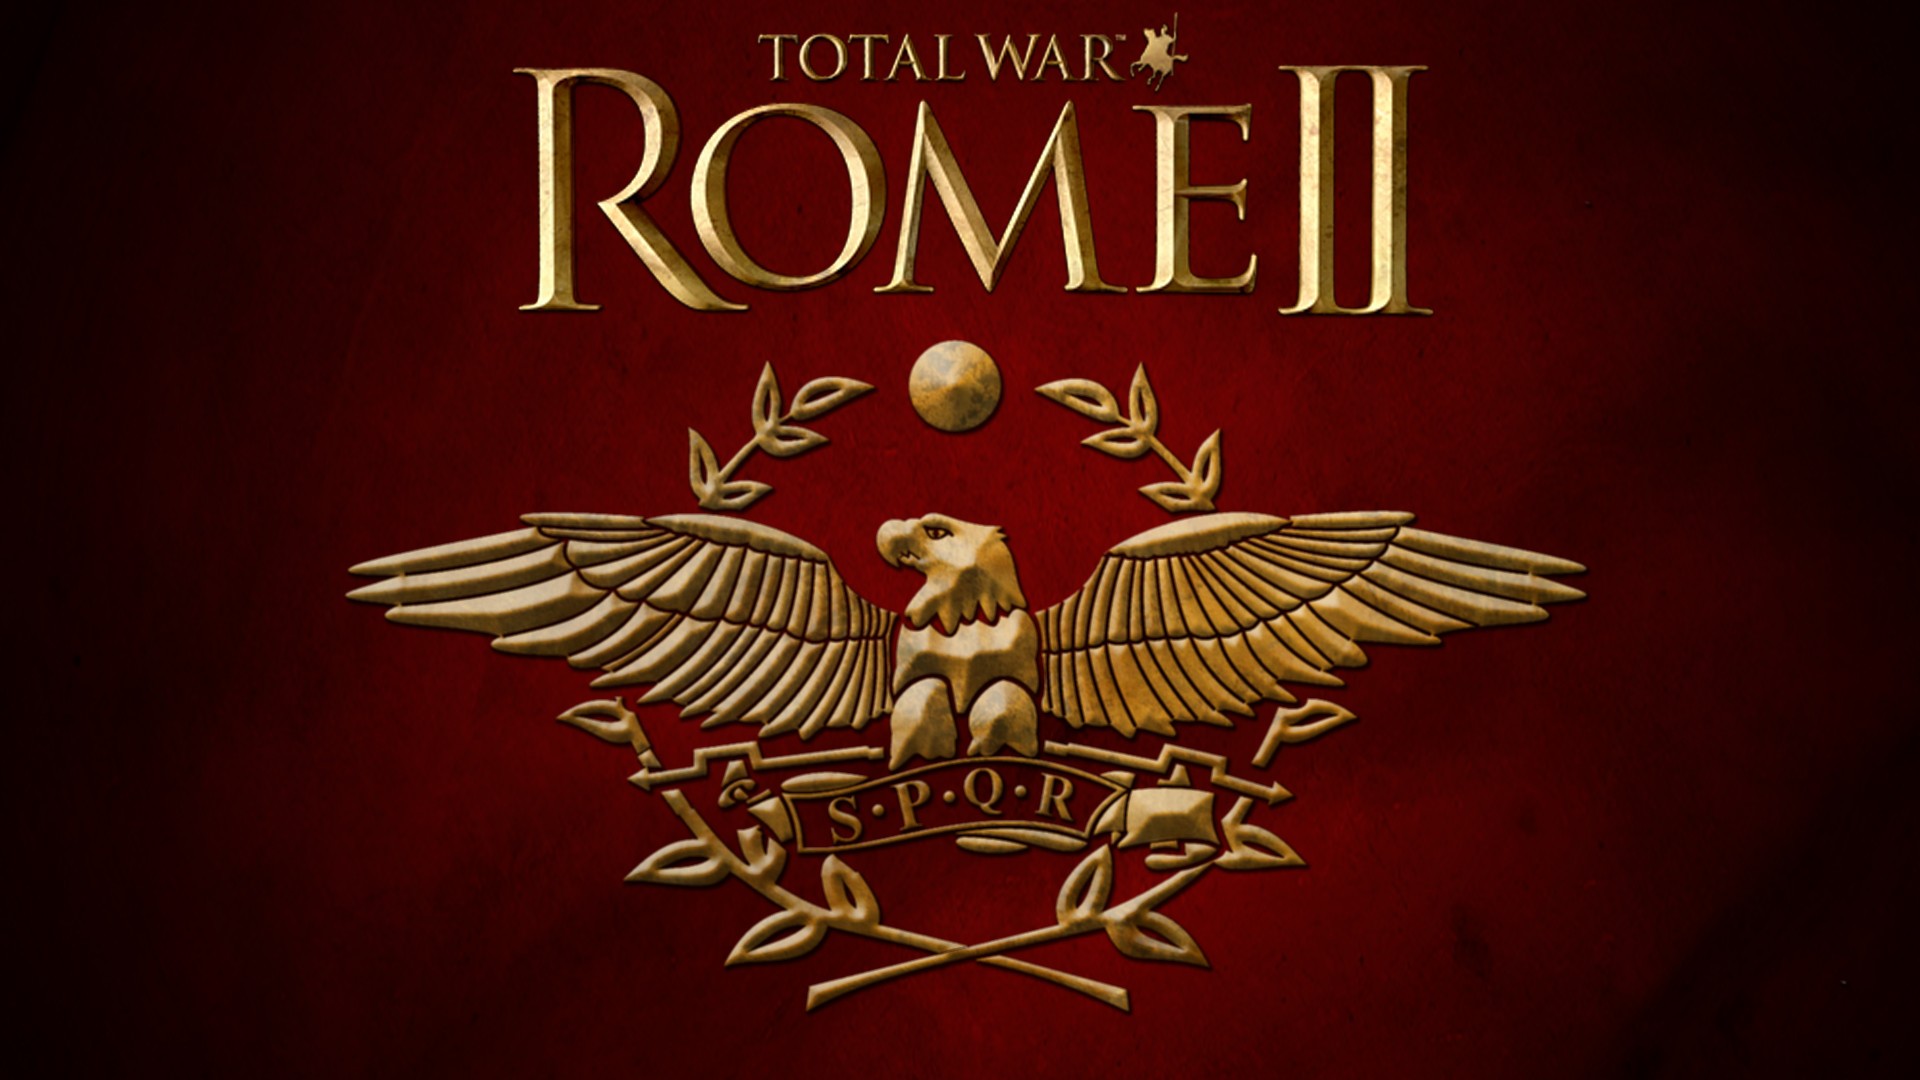 Rome 2 Total War Spqr - HD Wallpaper 